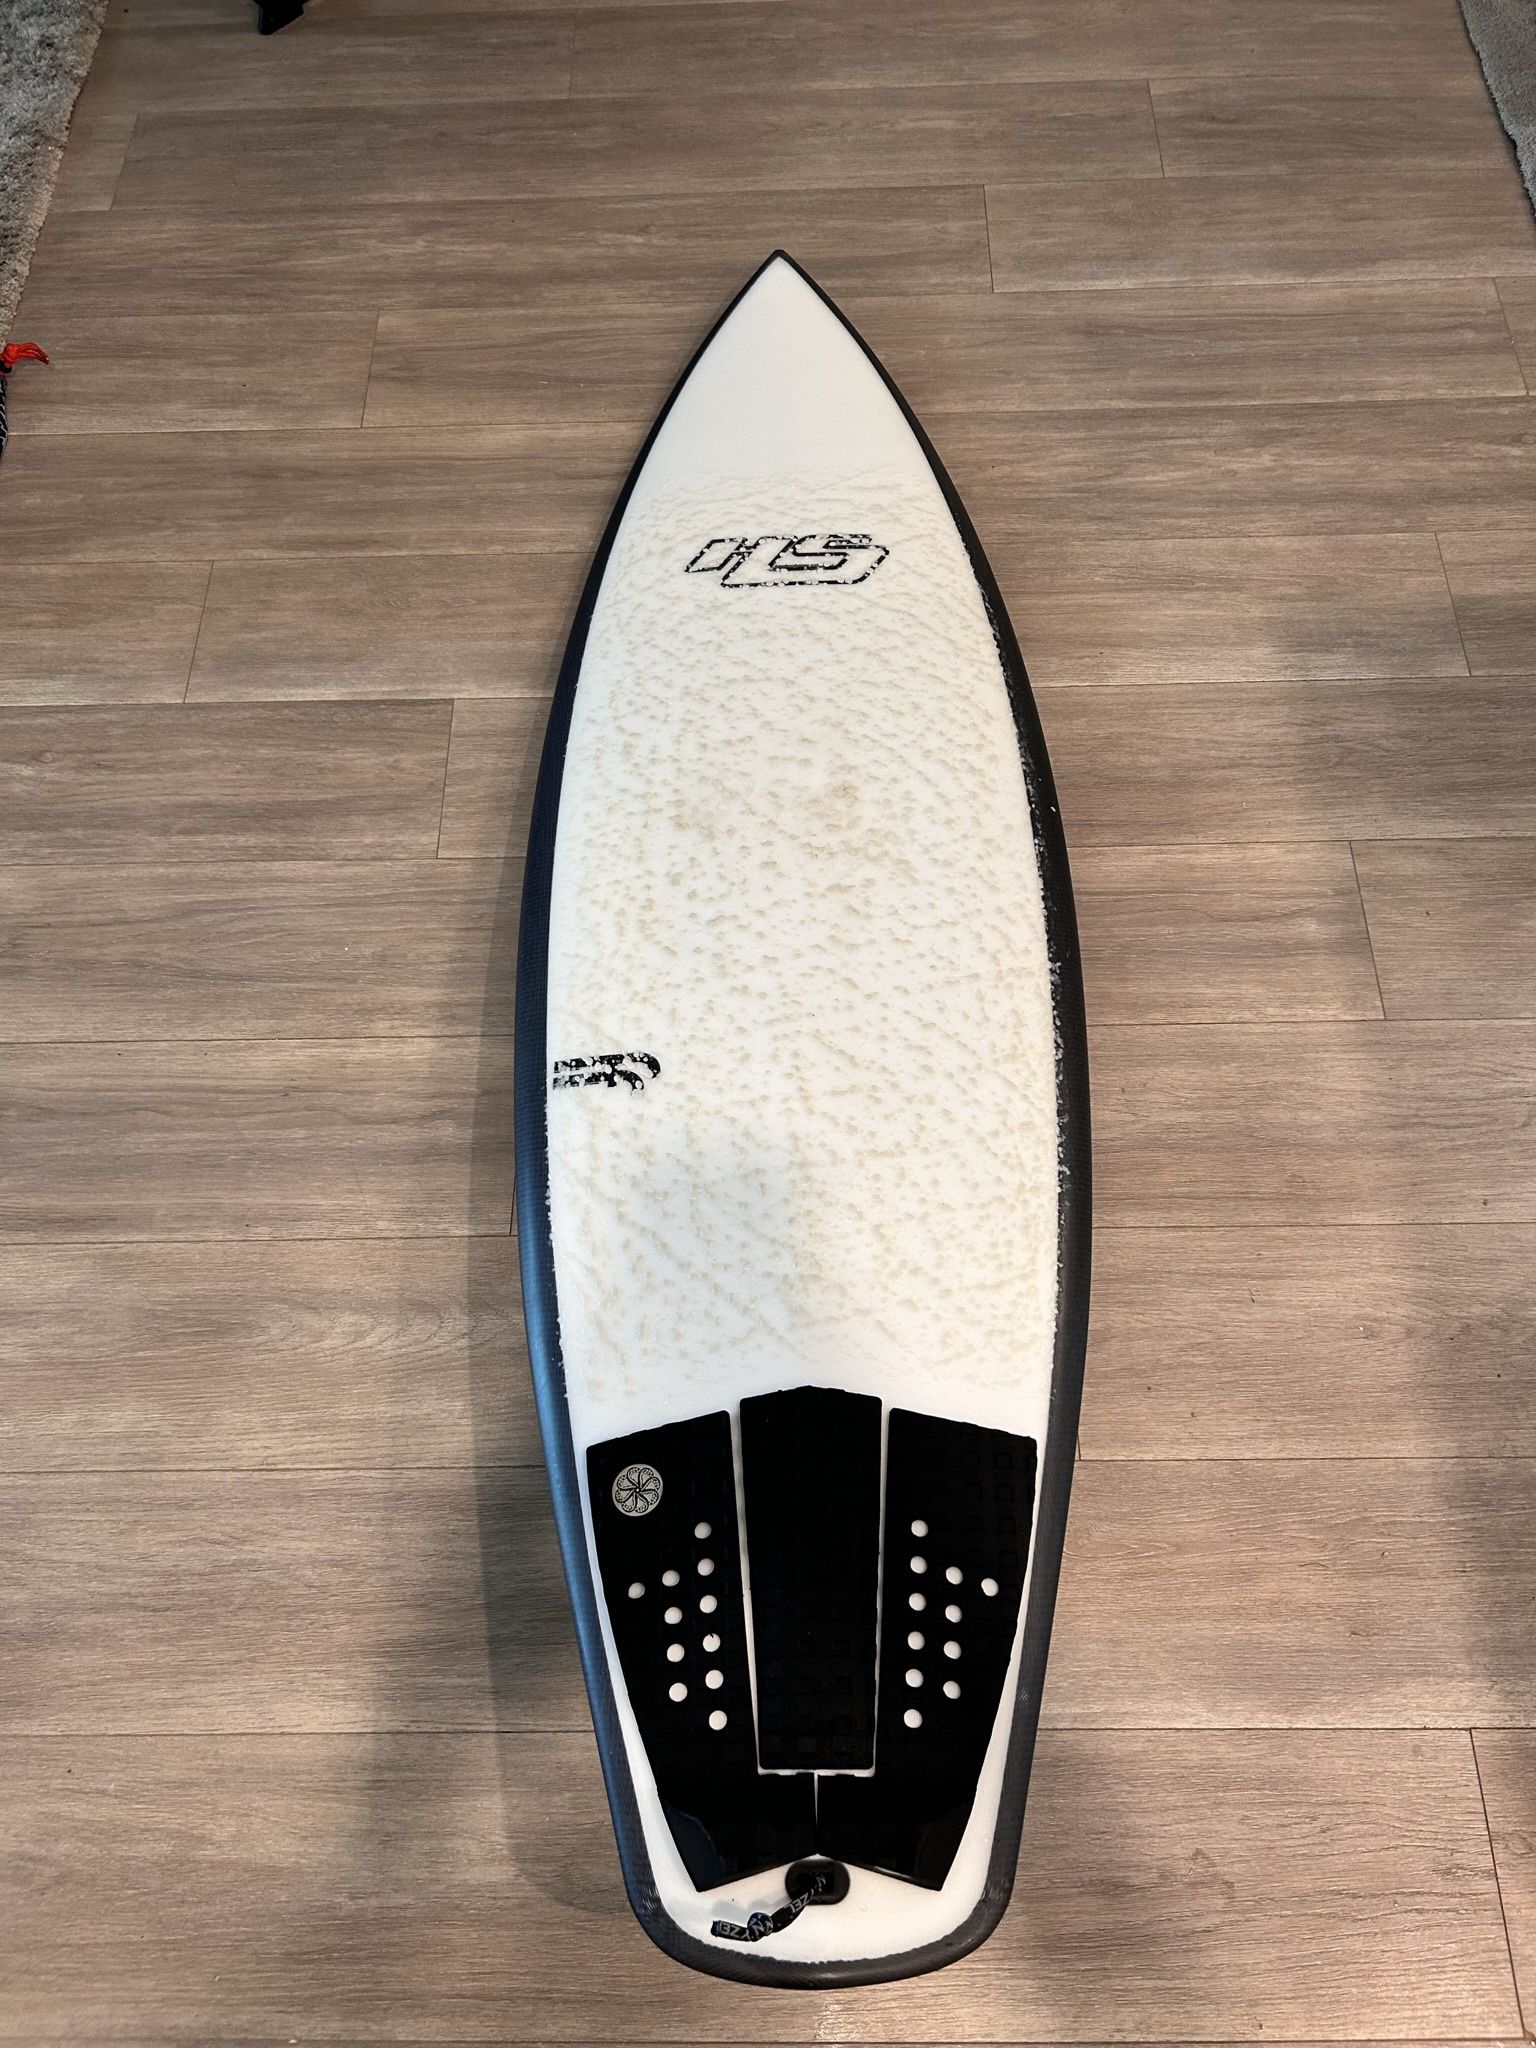 Haydenshapes Holy Grail Surfboard